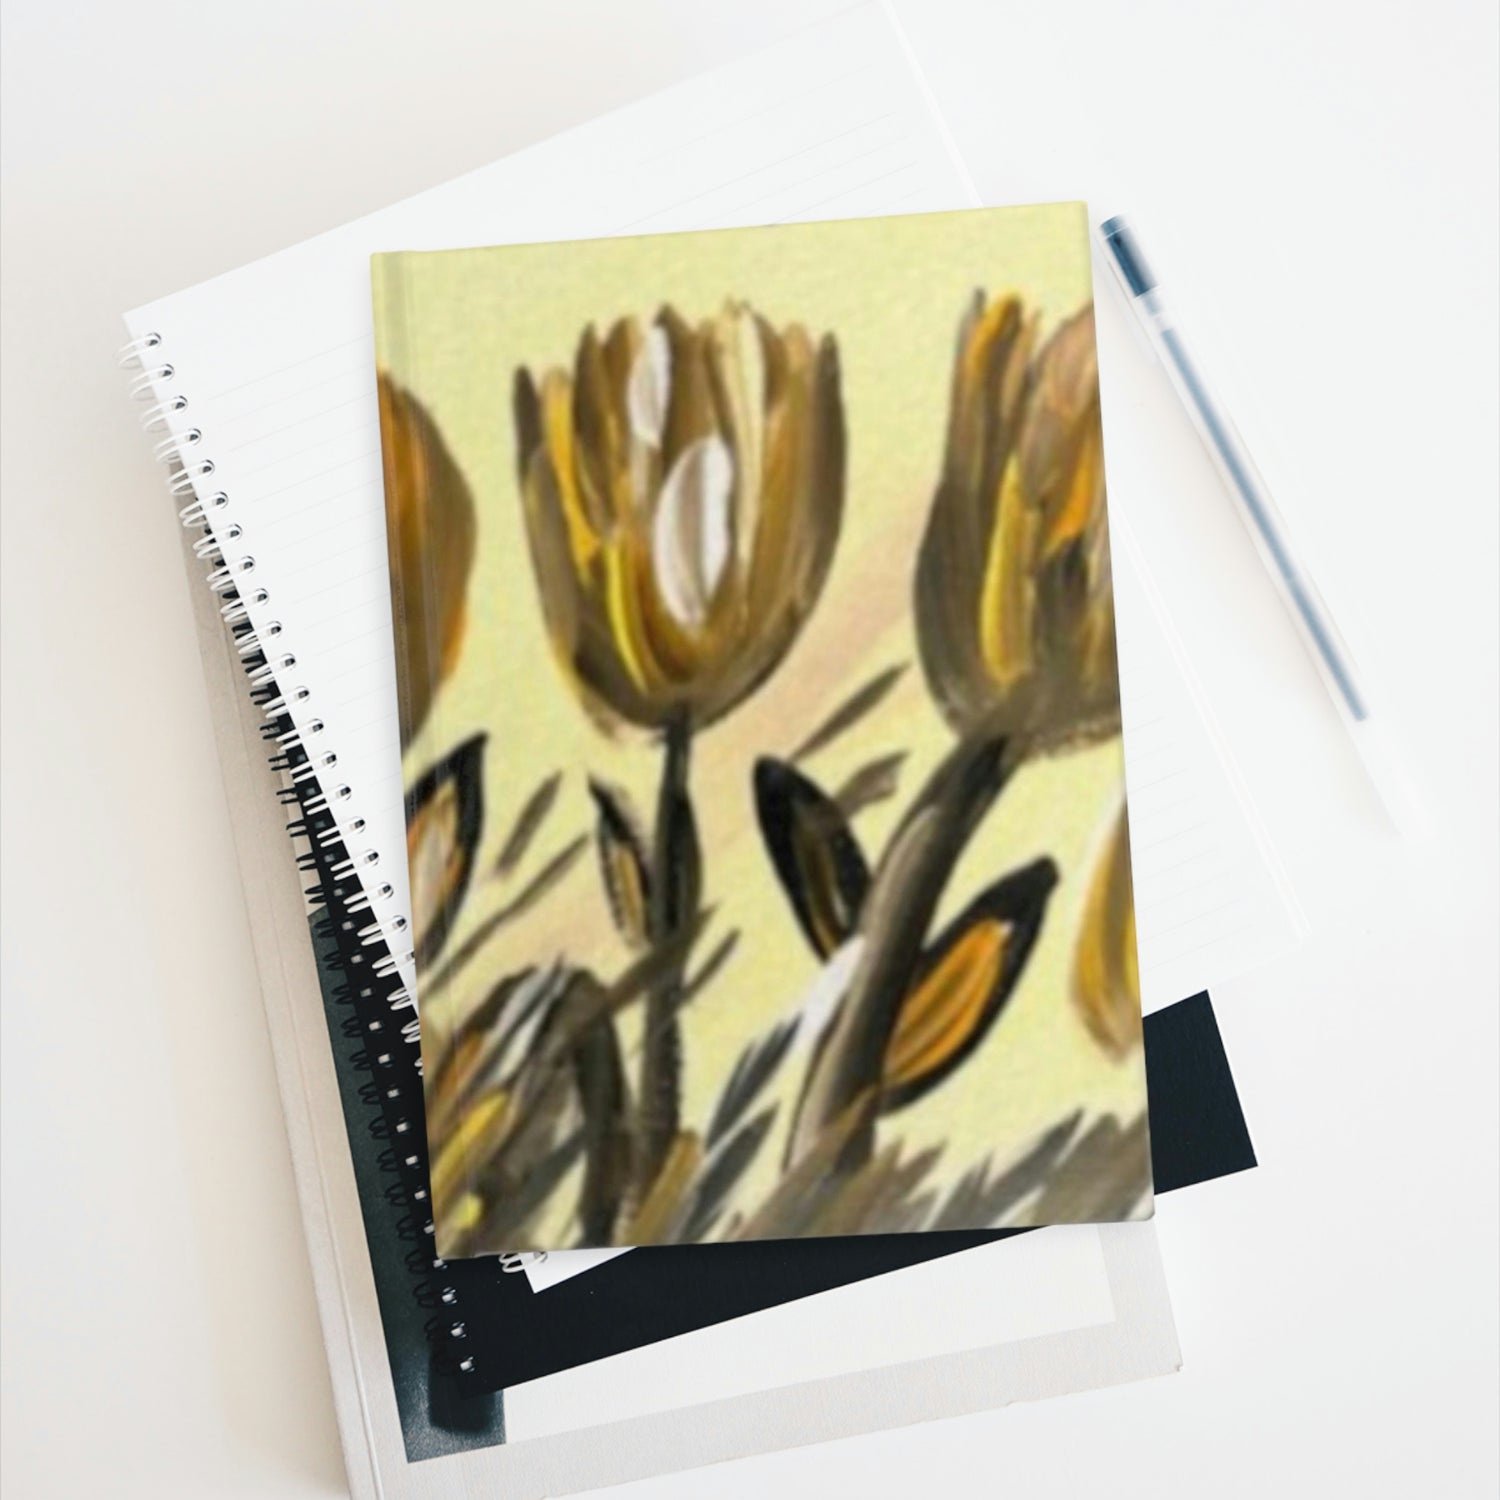 The Golden Tulips Art by  Deanna Caroon Journal - Ruled Line